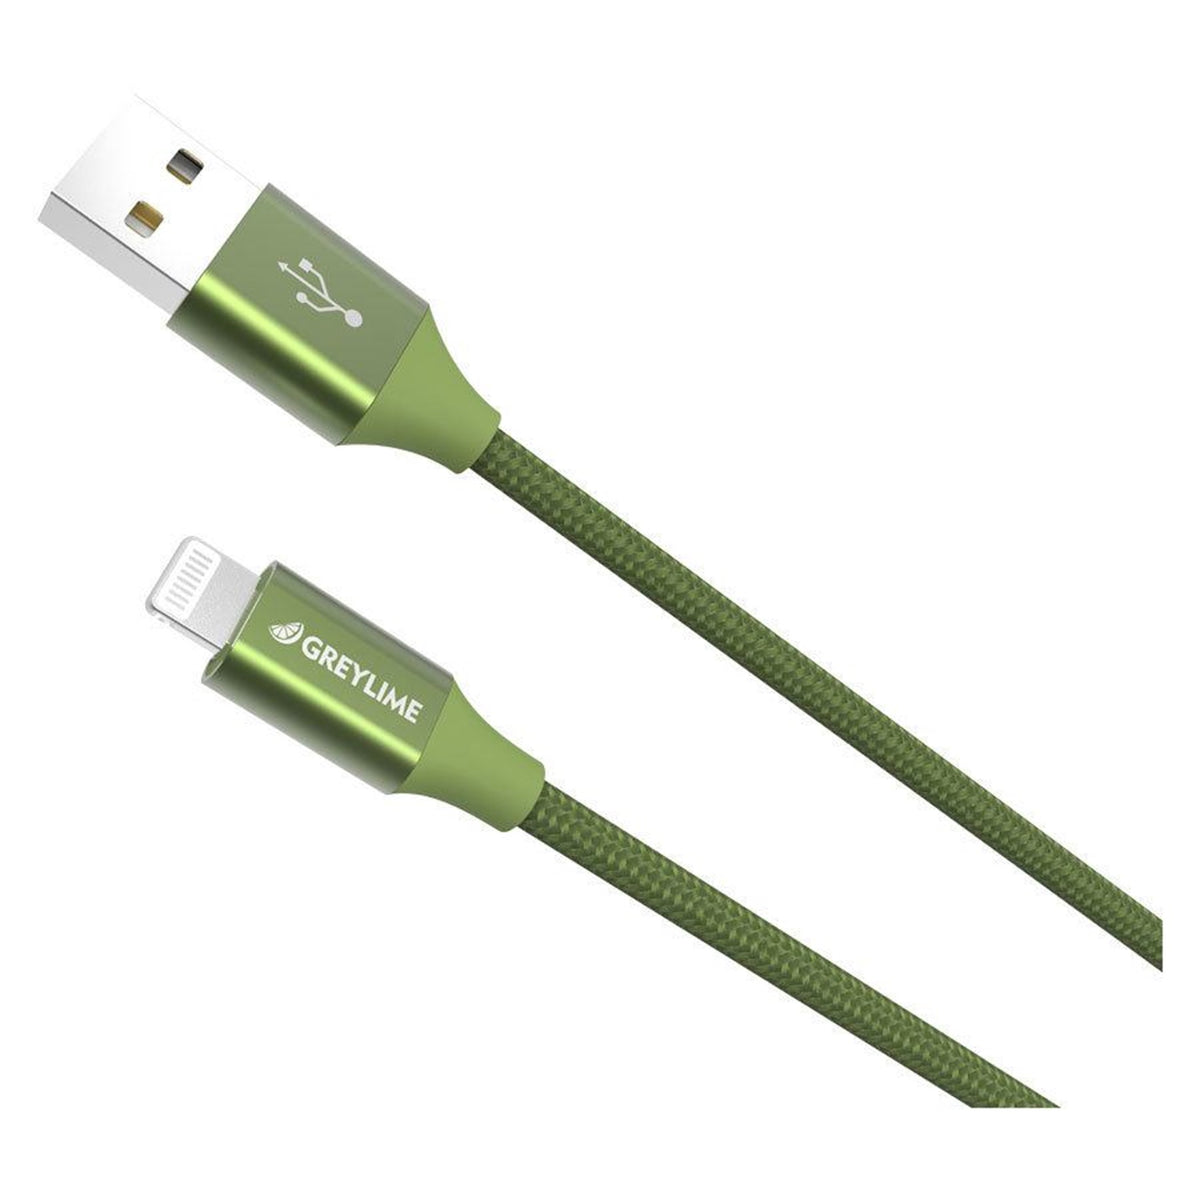 USB C ZU LIGHTNING KABEL 2M - Ladekabel - dried green